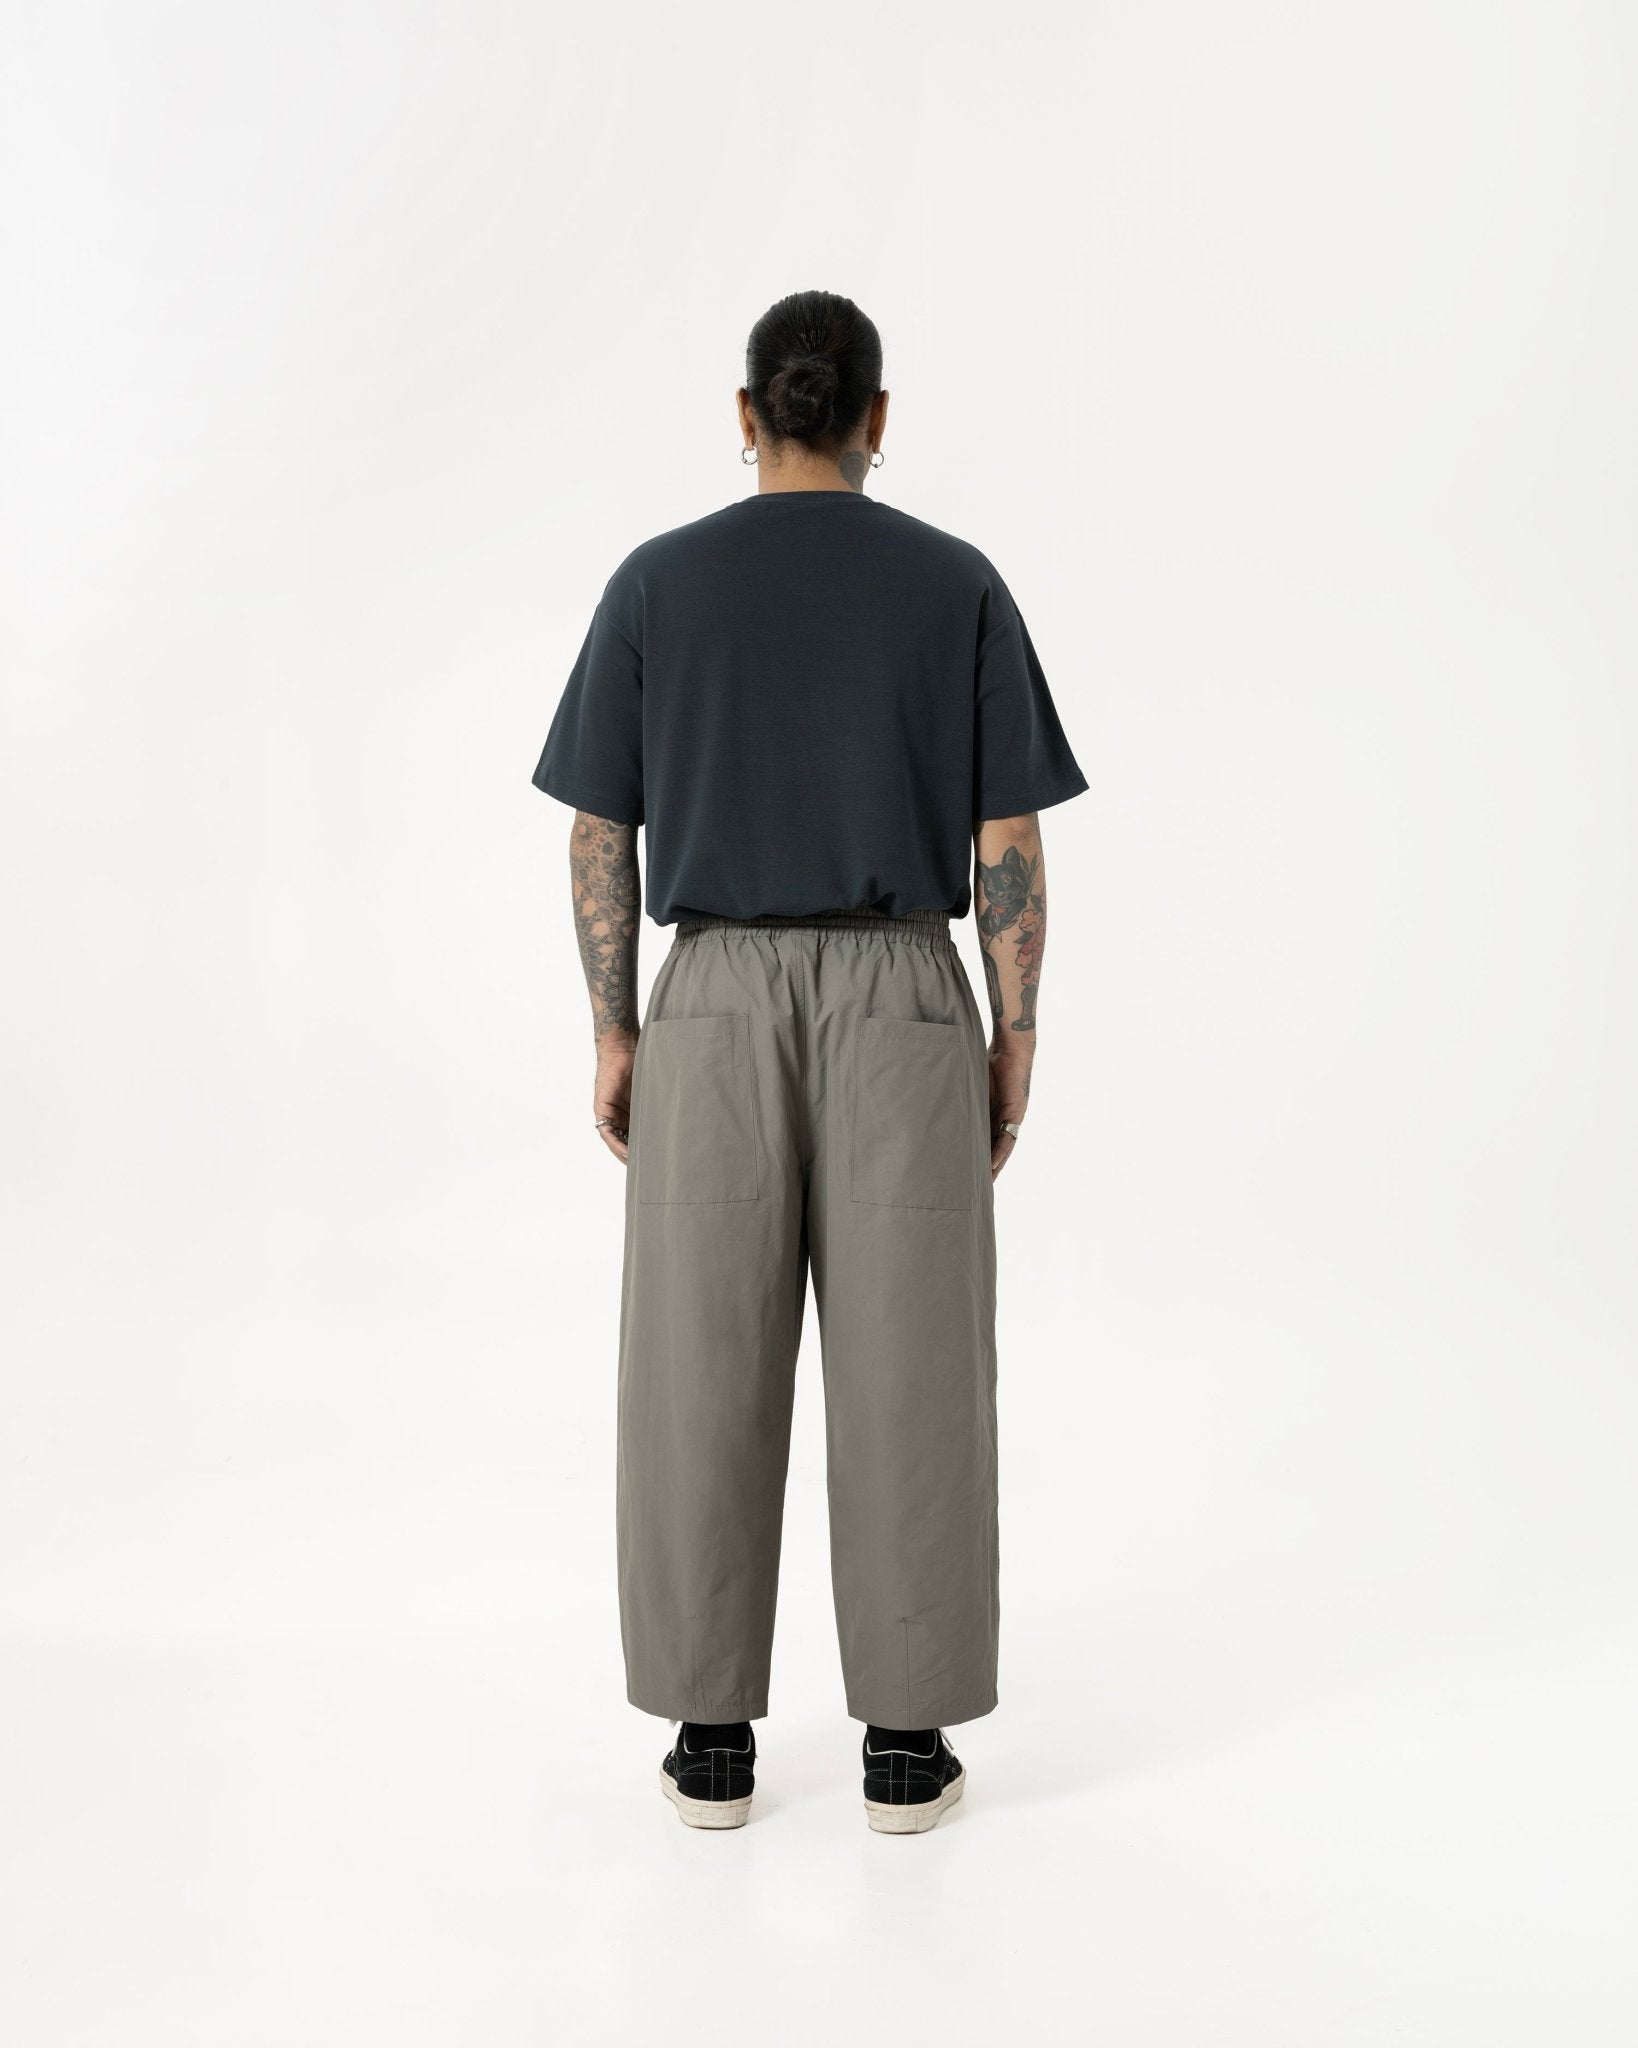 GRAYE Singapore Designer Menswear - Relaxed Elasticated Trousers - Pebble Gray